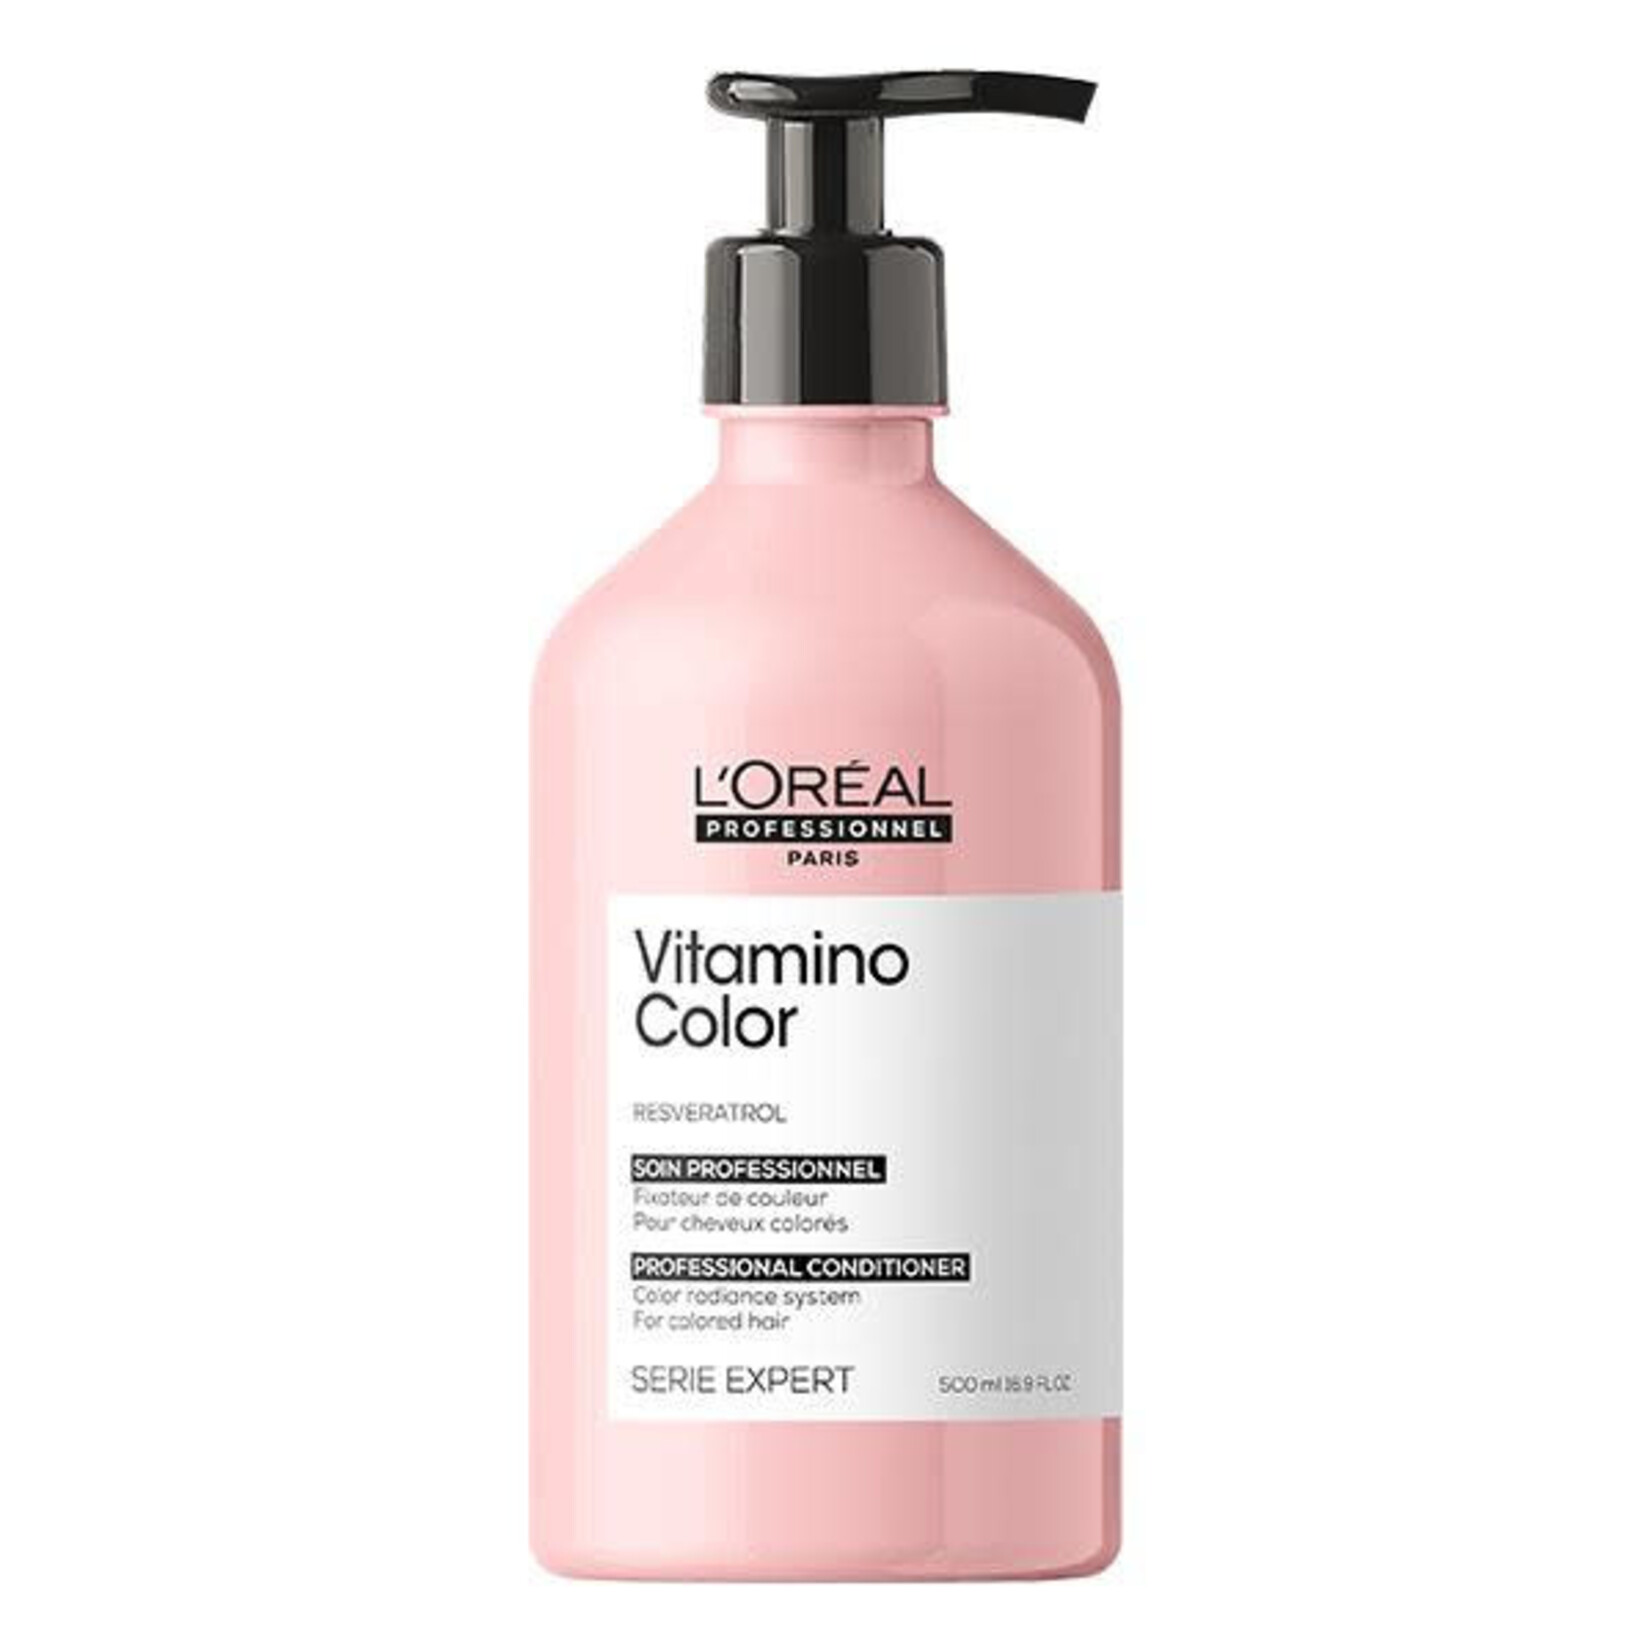 L'Oréal L'Oréal Professionnel - Vitamino Color - Color Protecting Conditioner 500ml